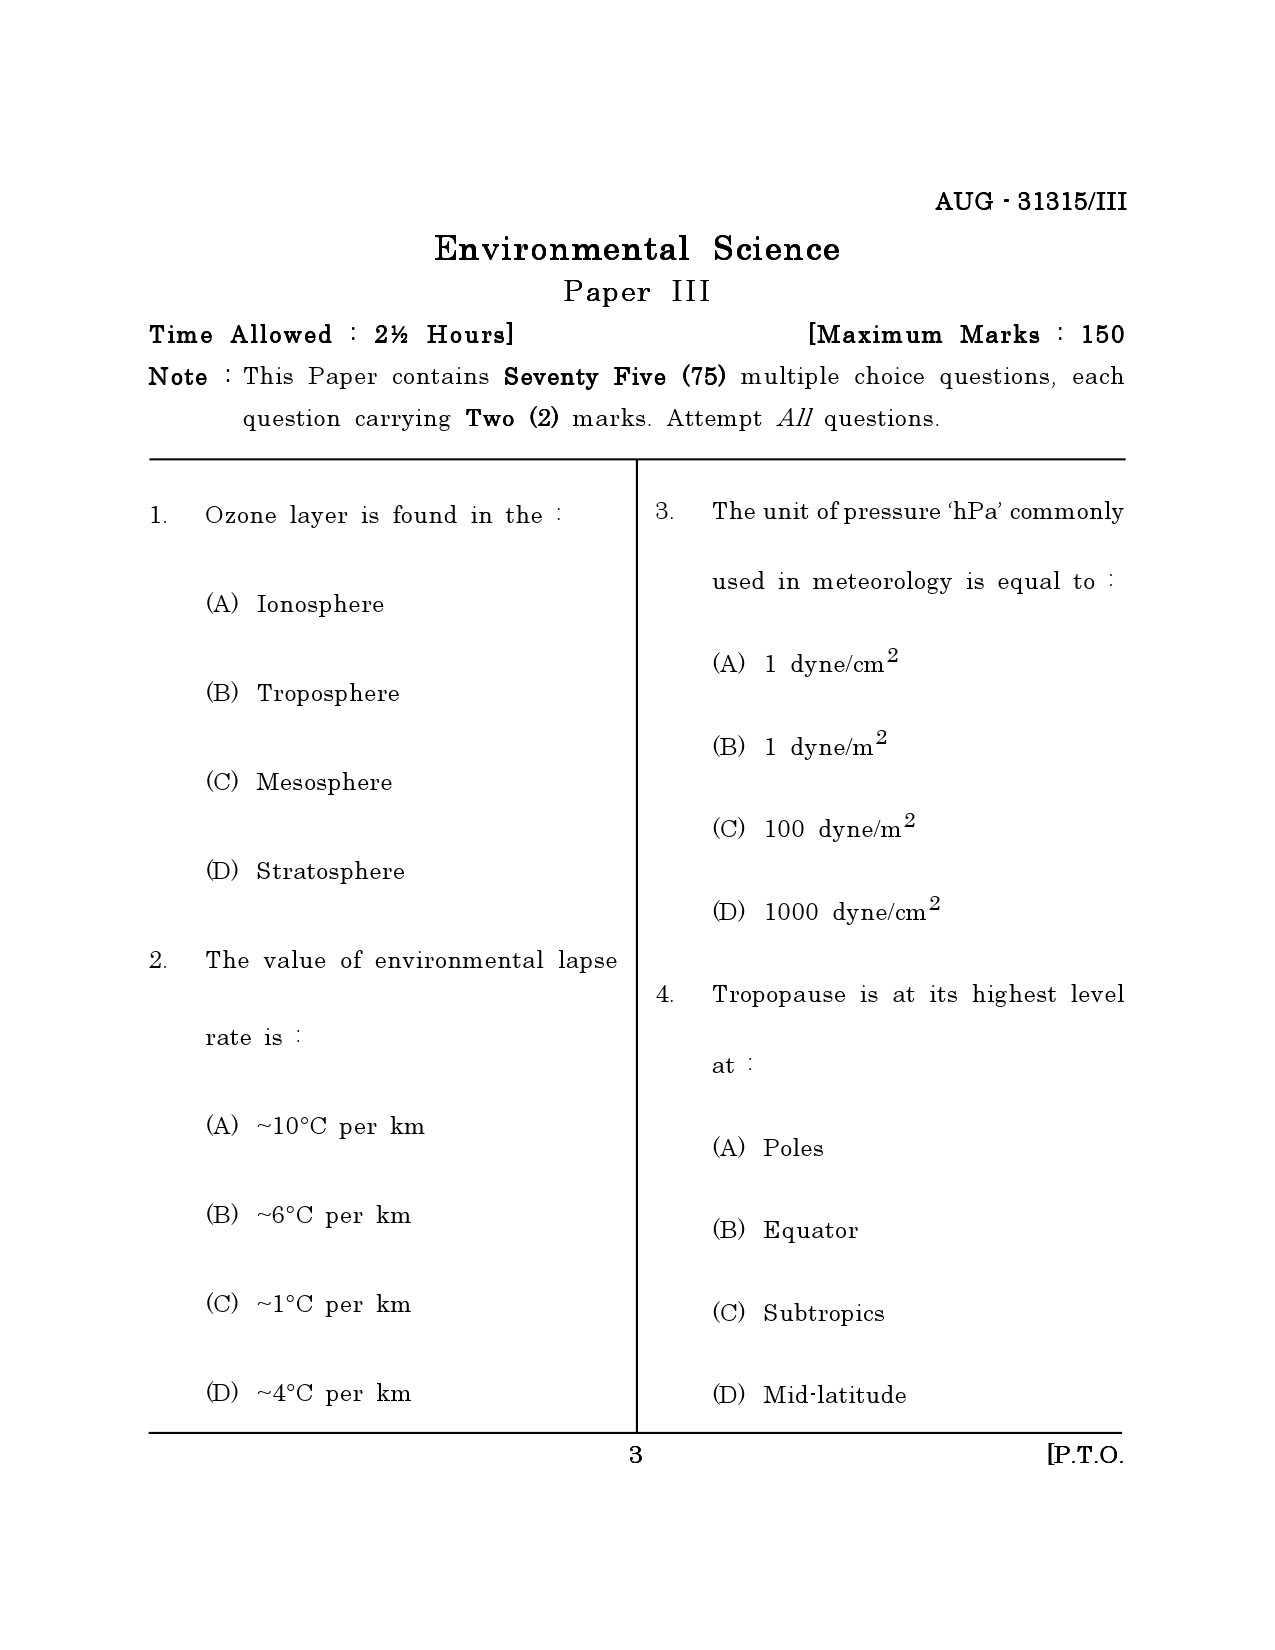 Maharashtra SET Environmental Sciences Question Paper III August 2015 2